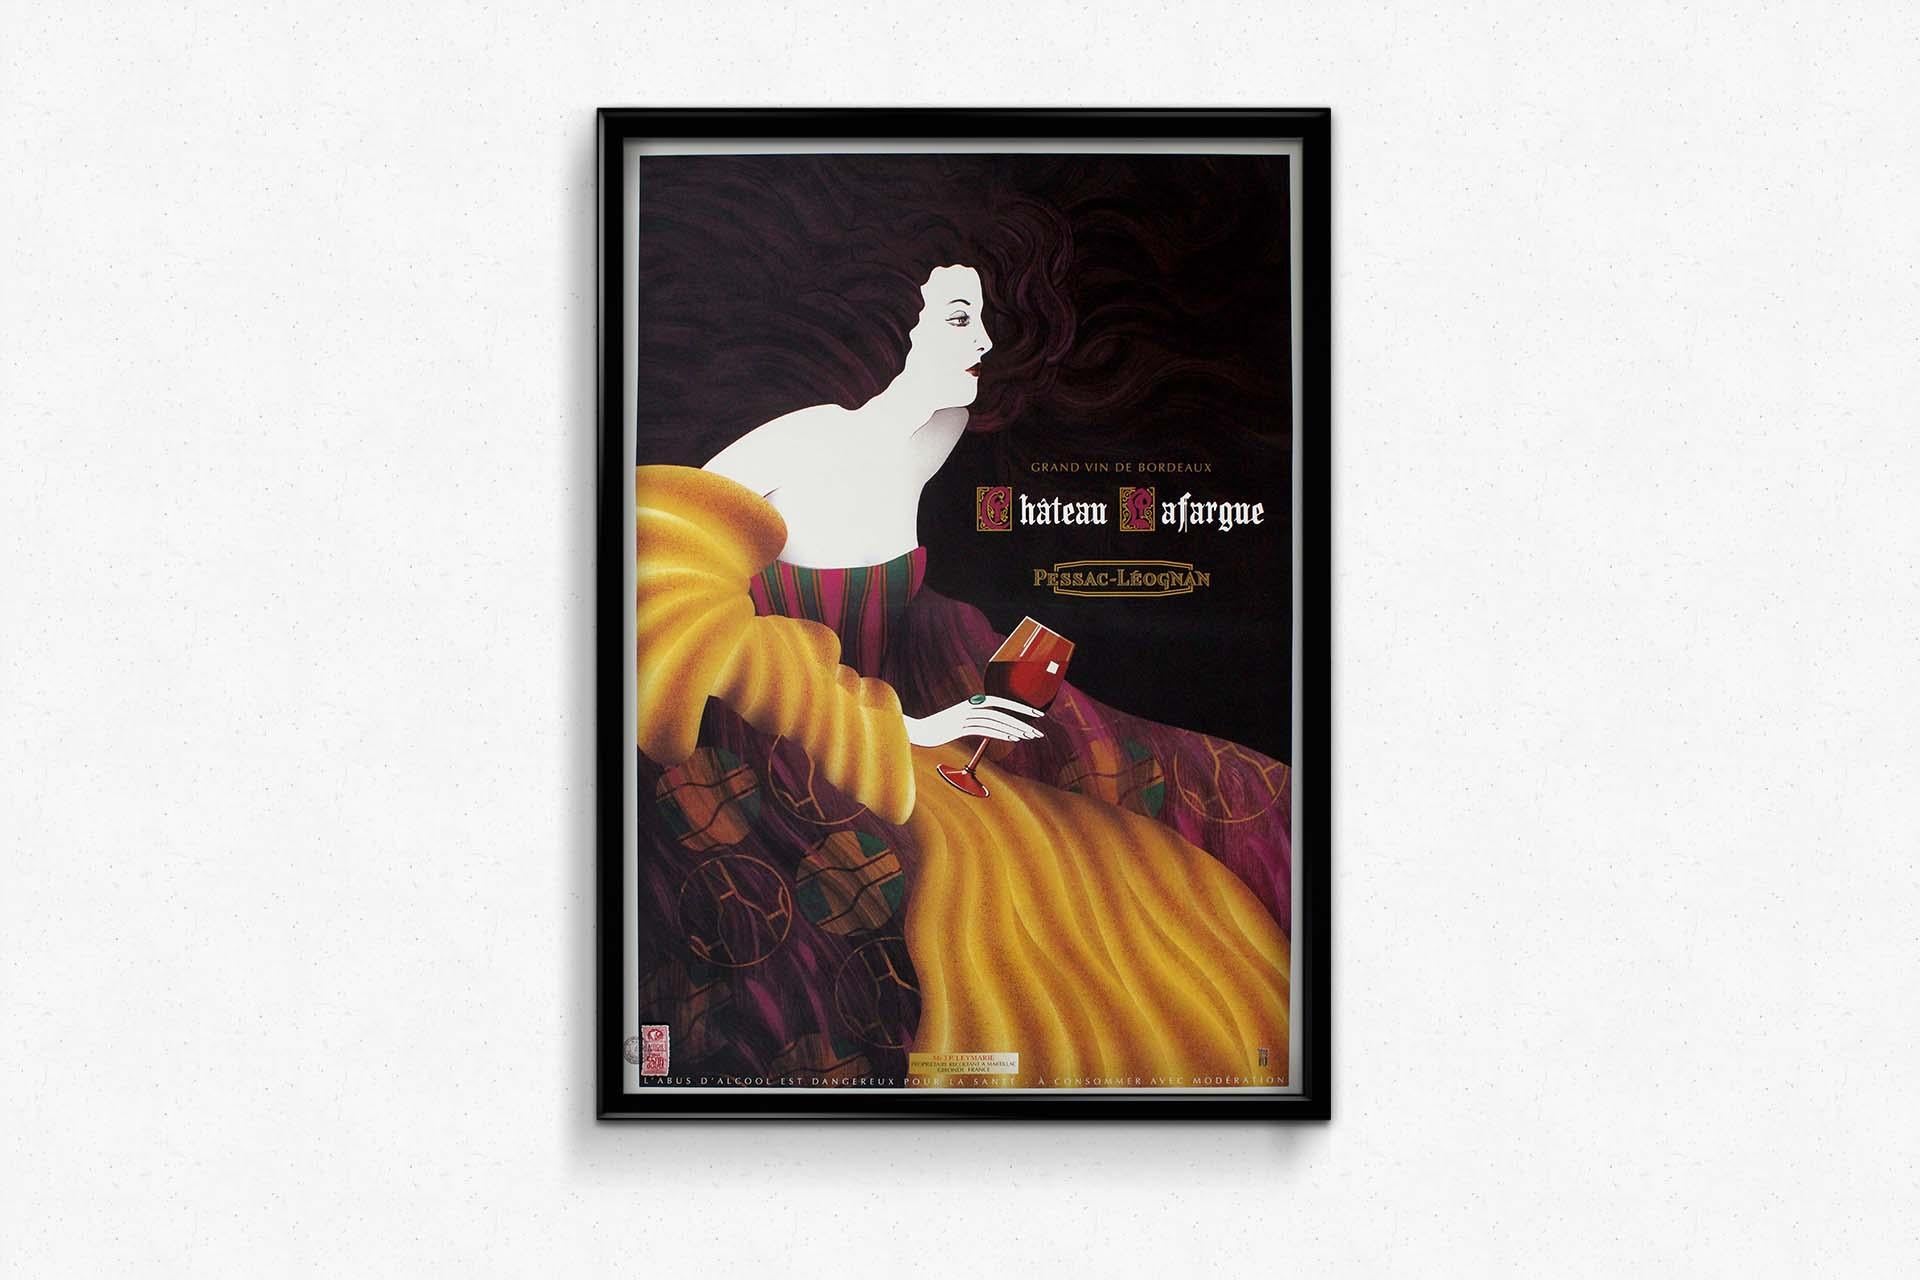 Philippe Sommer's original poster for Chateau Lafargue Pessac Léognan For Sale 3